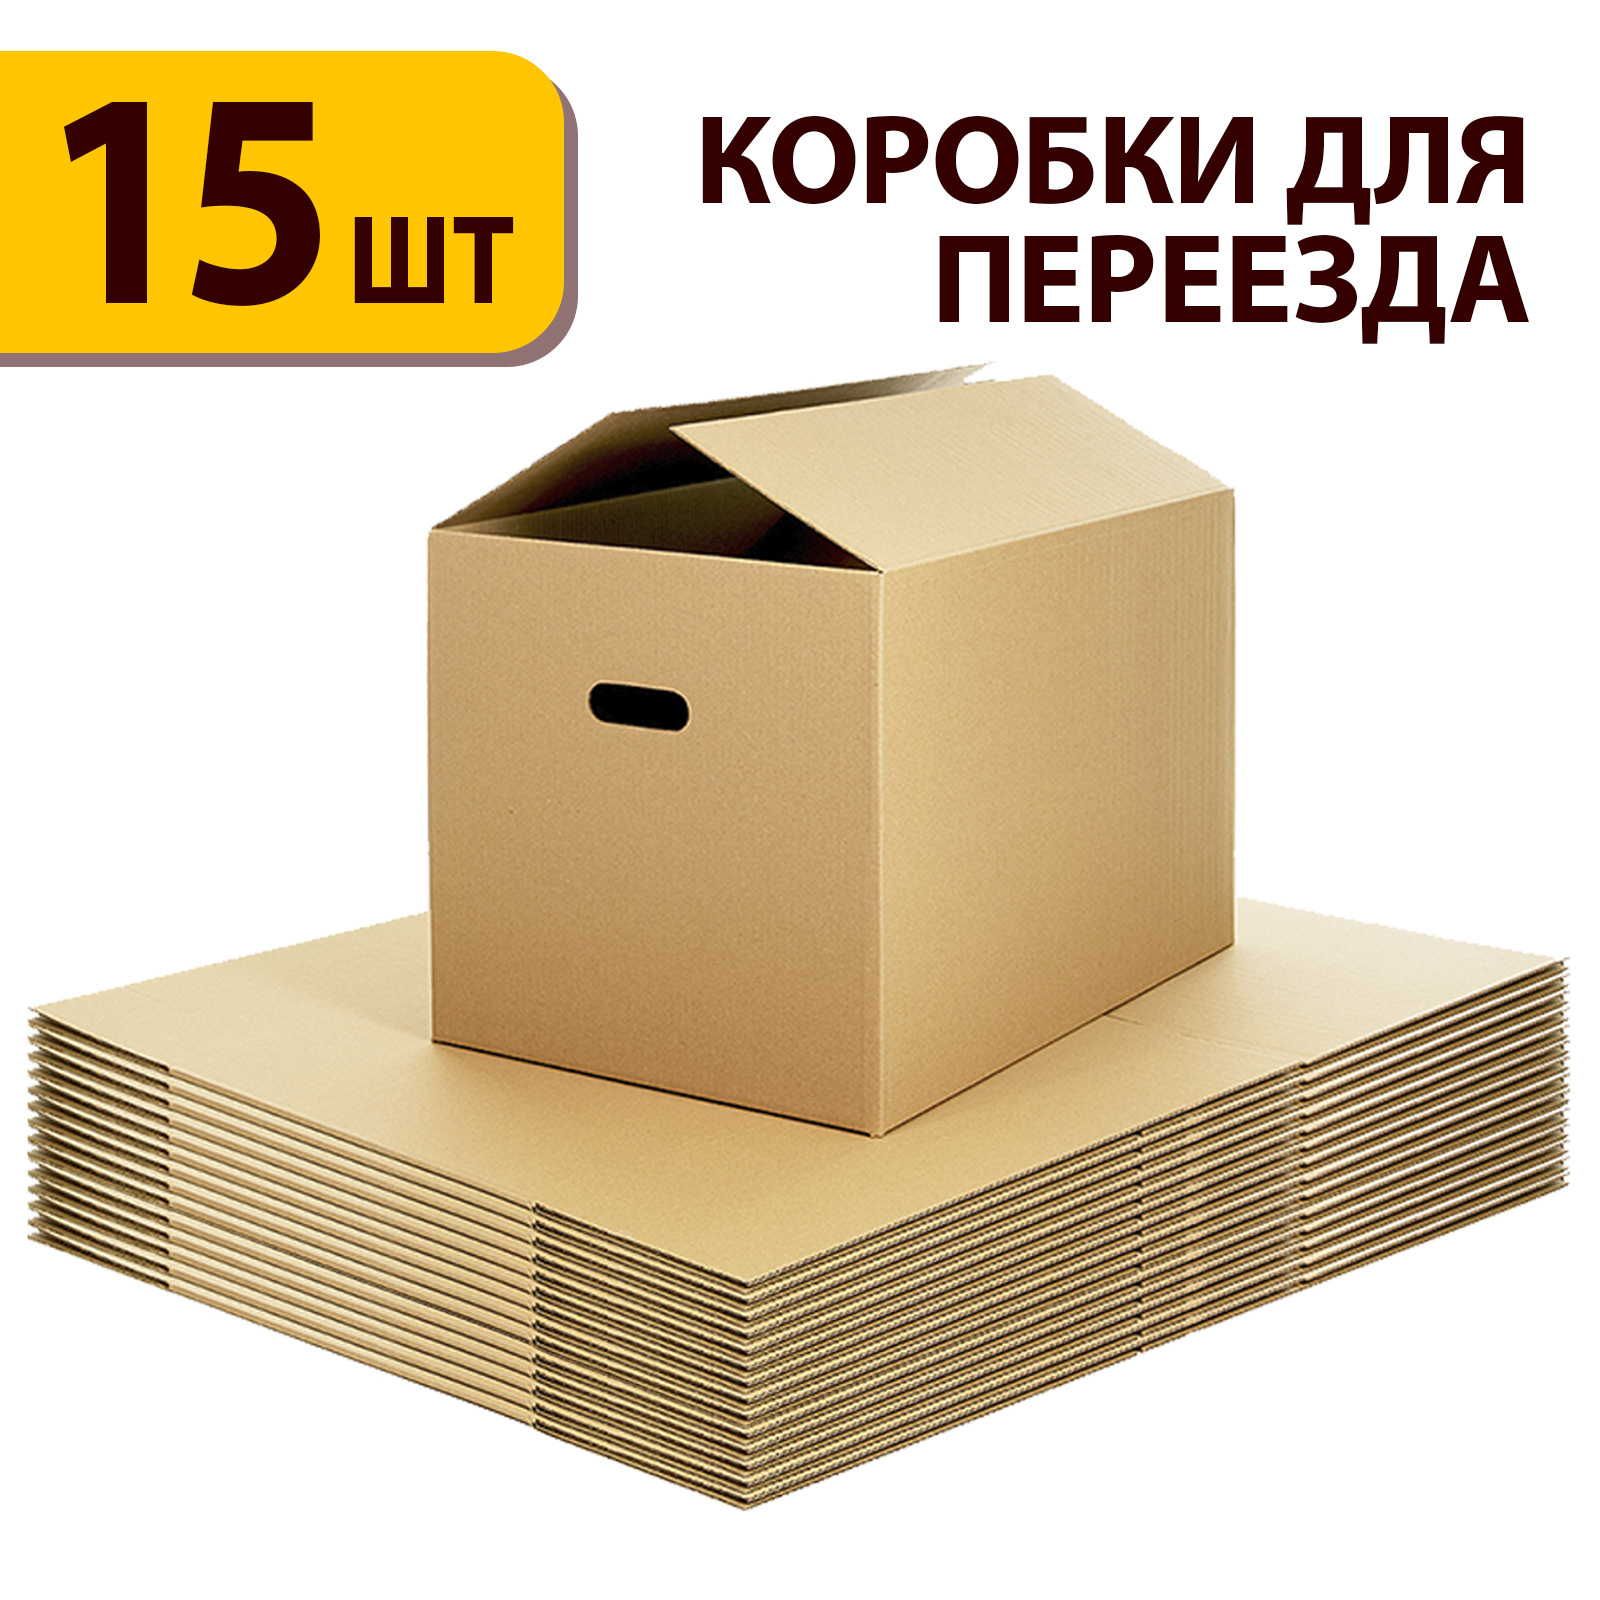 Оби коробки. Картонные коробки 60 40 40. Коробка для переезда. Коробка для хранения 40х40х40. Коробка Obi картонная.